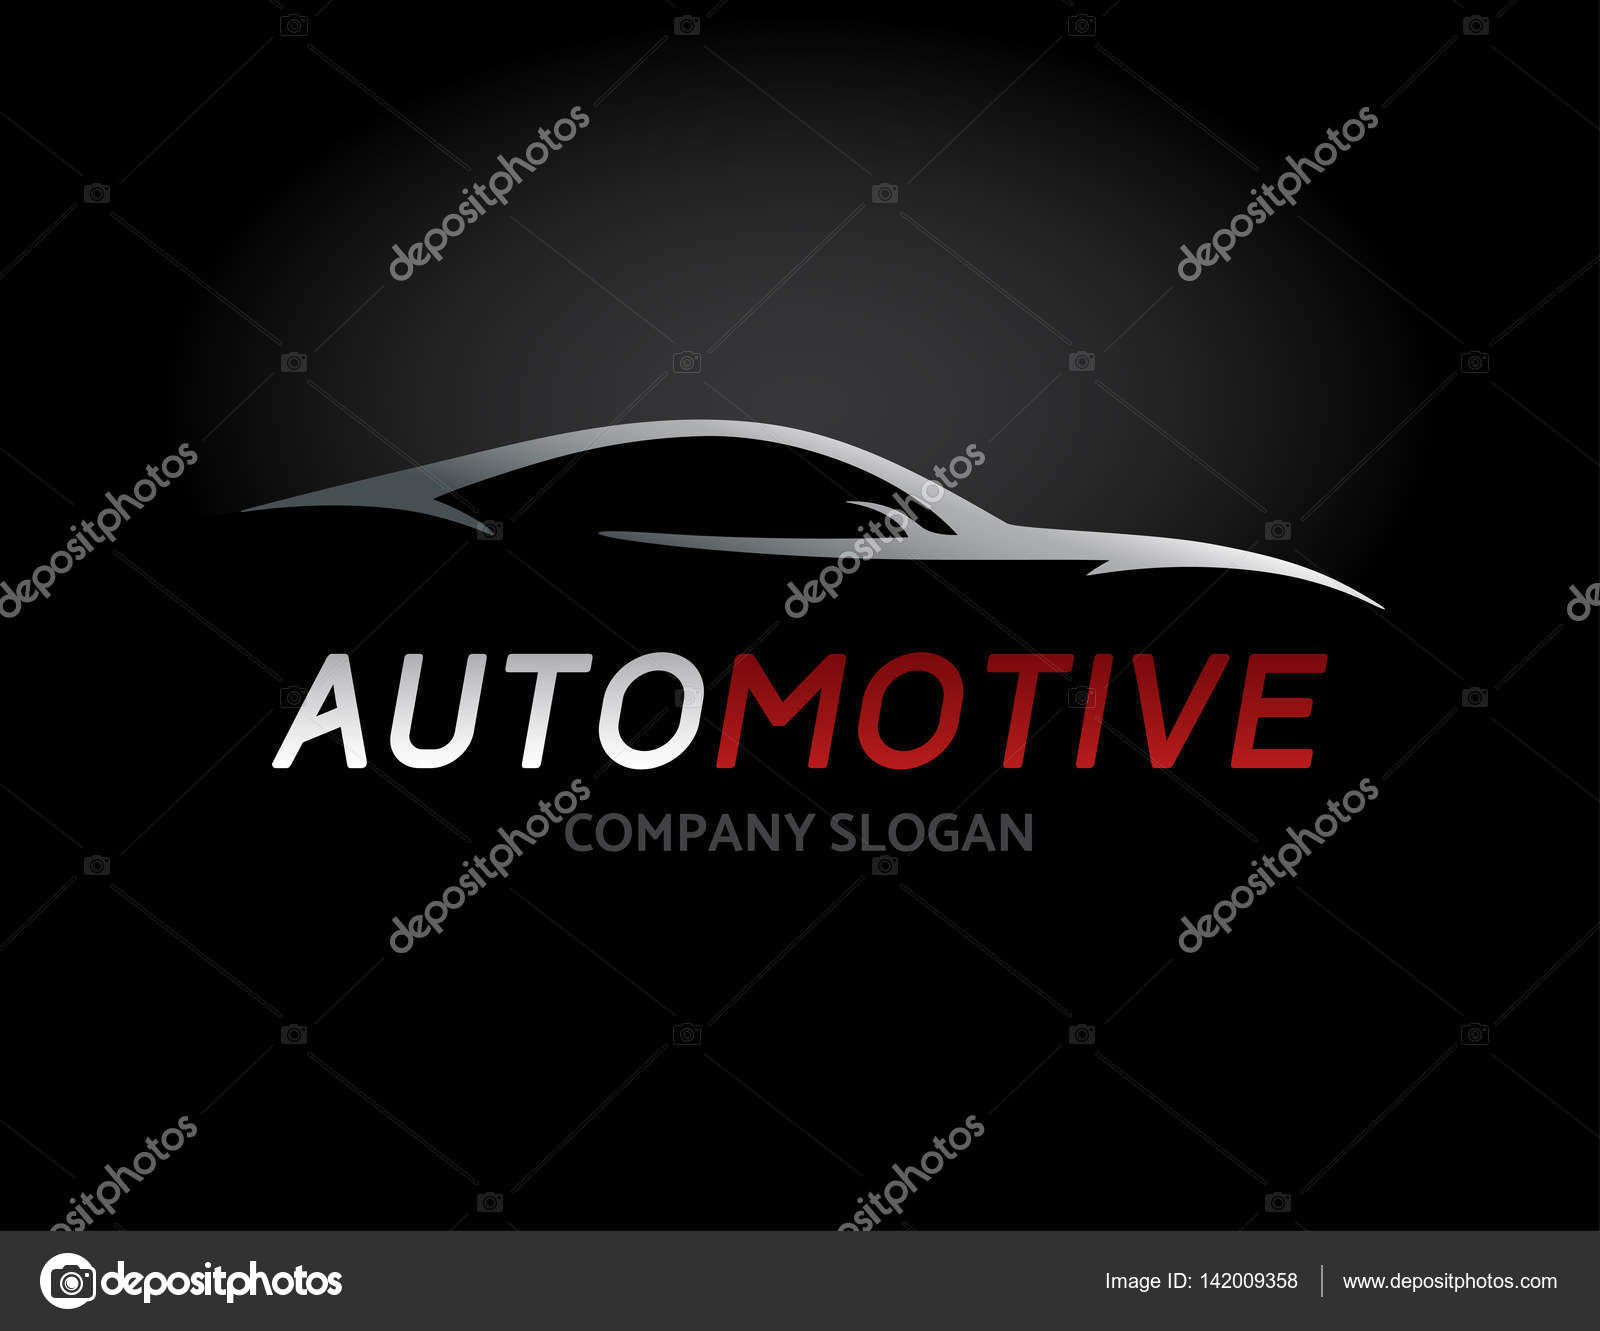 Car logos hi-res stock photography and images - Alamy